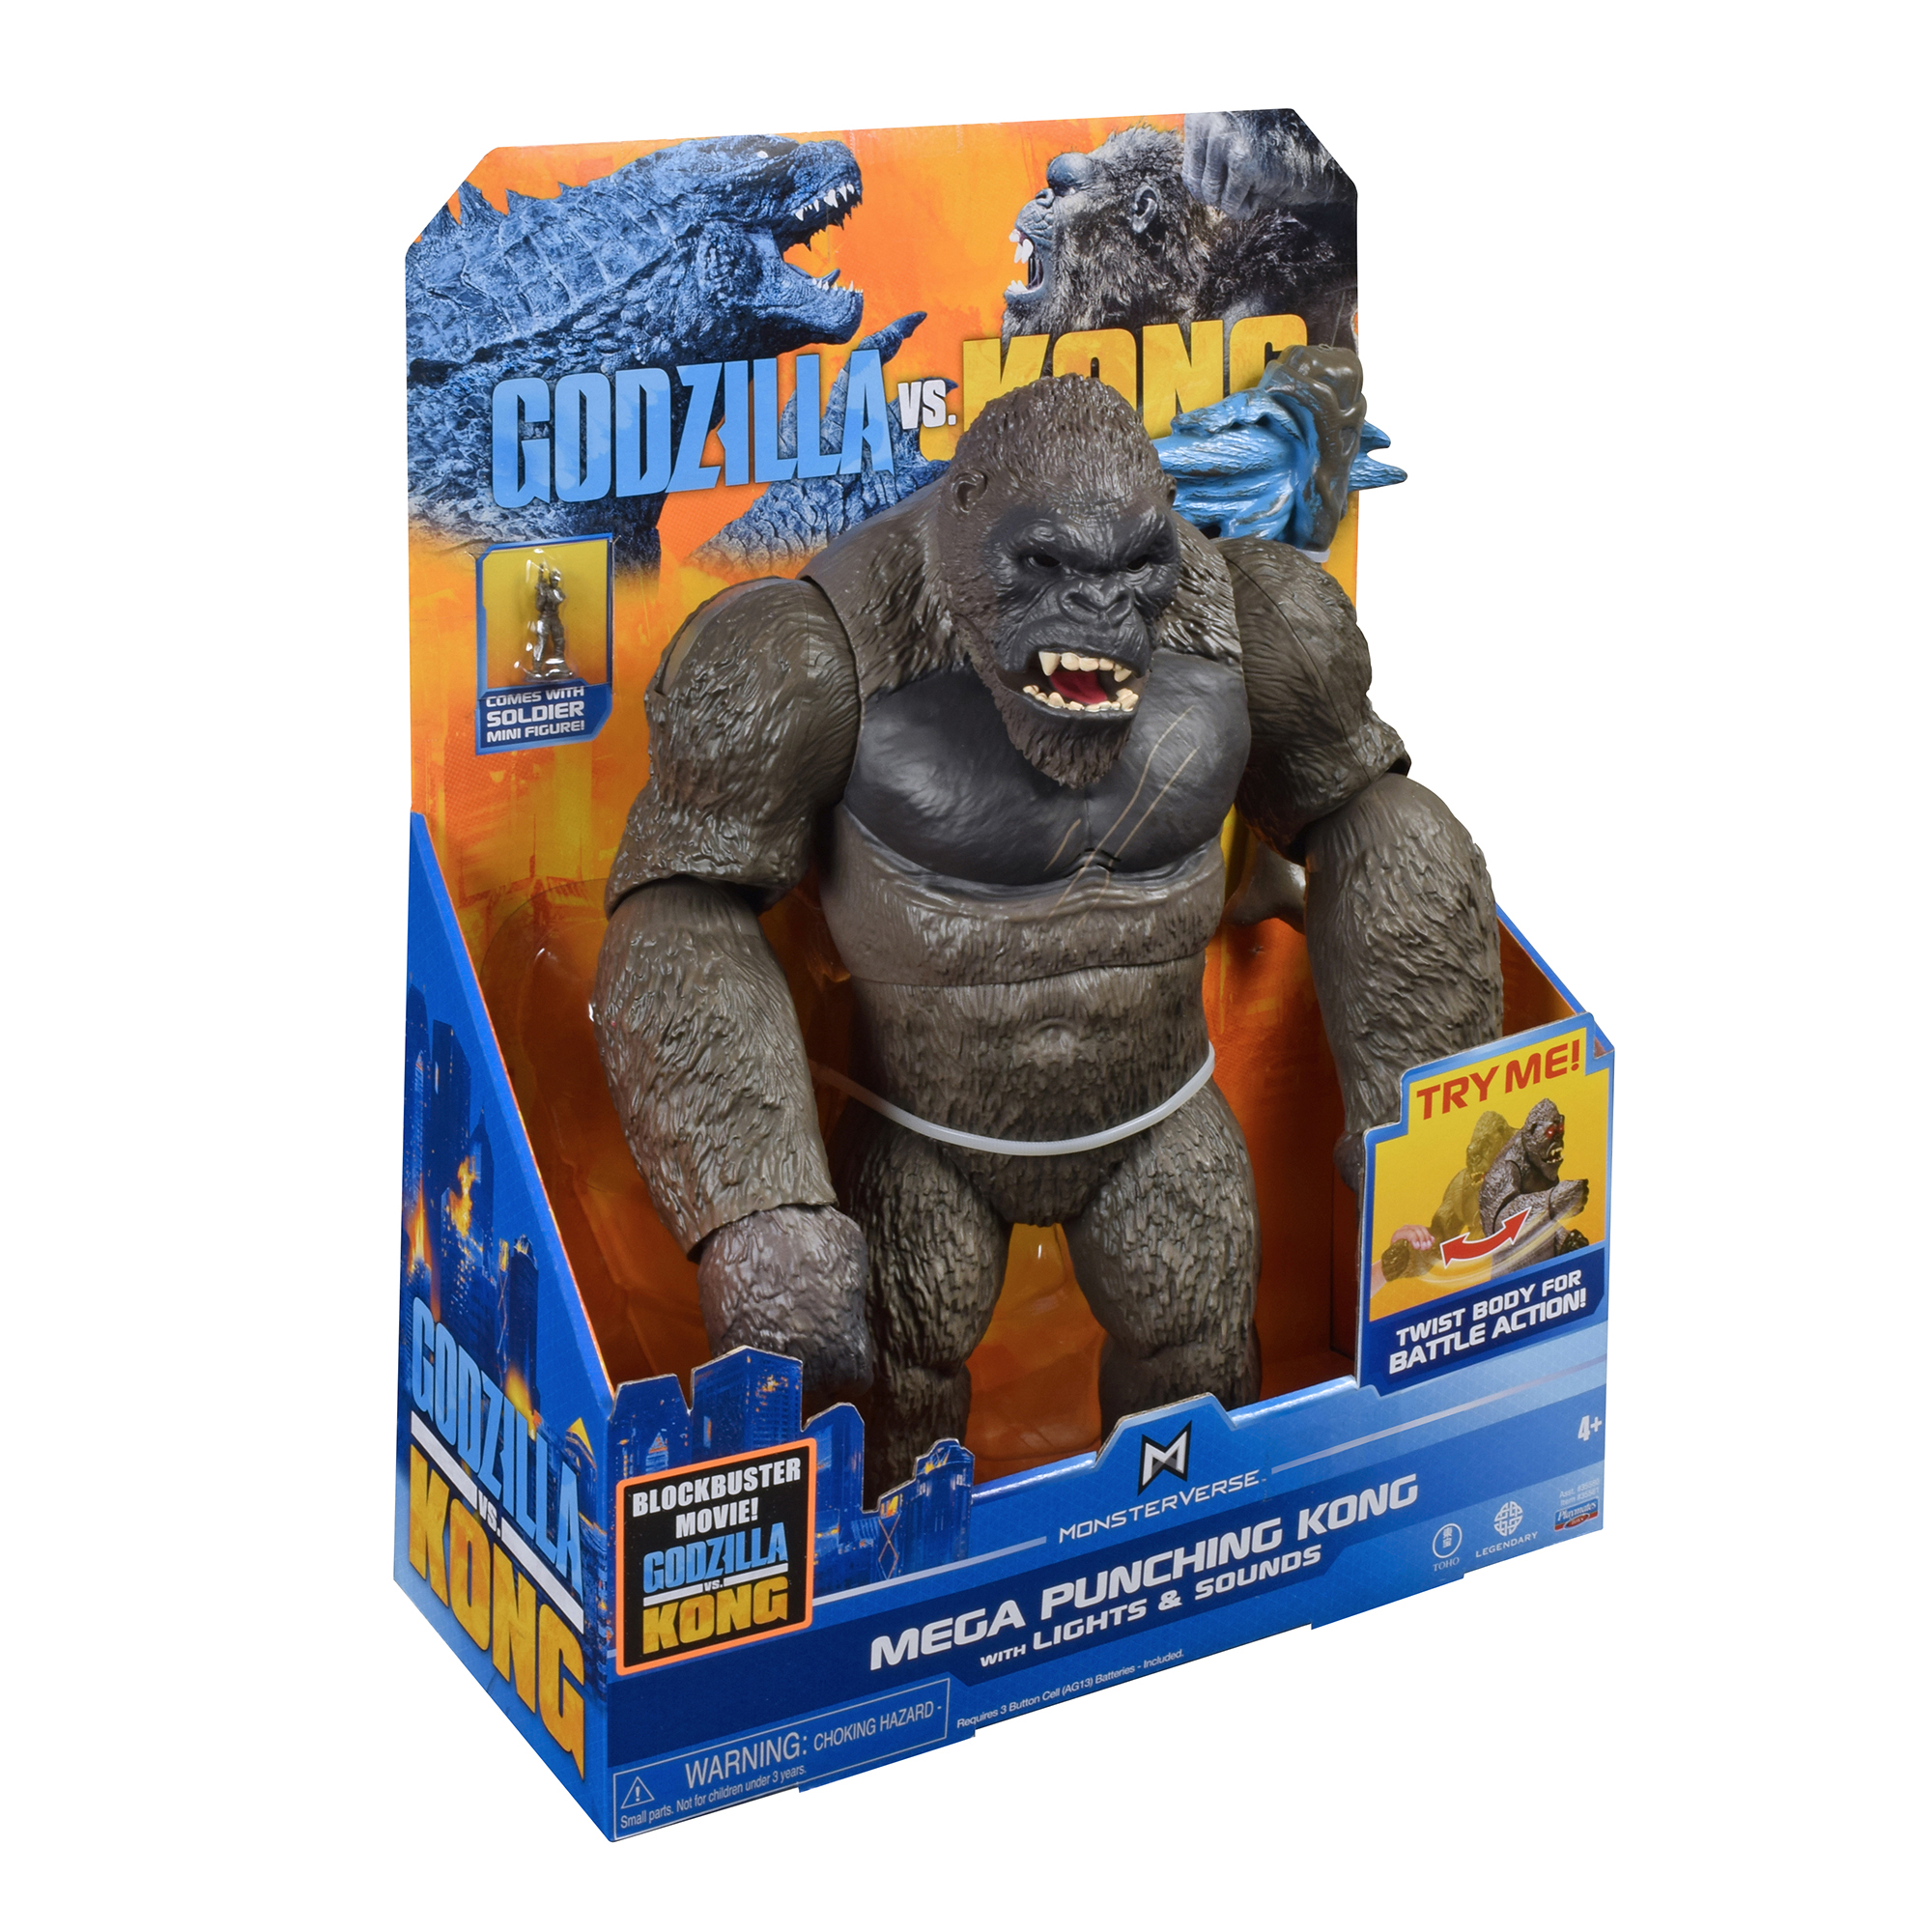 Mega Godzilla vs Kong Movie Series Action Figure Toy, Movable